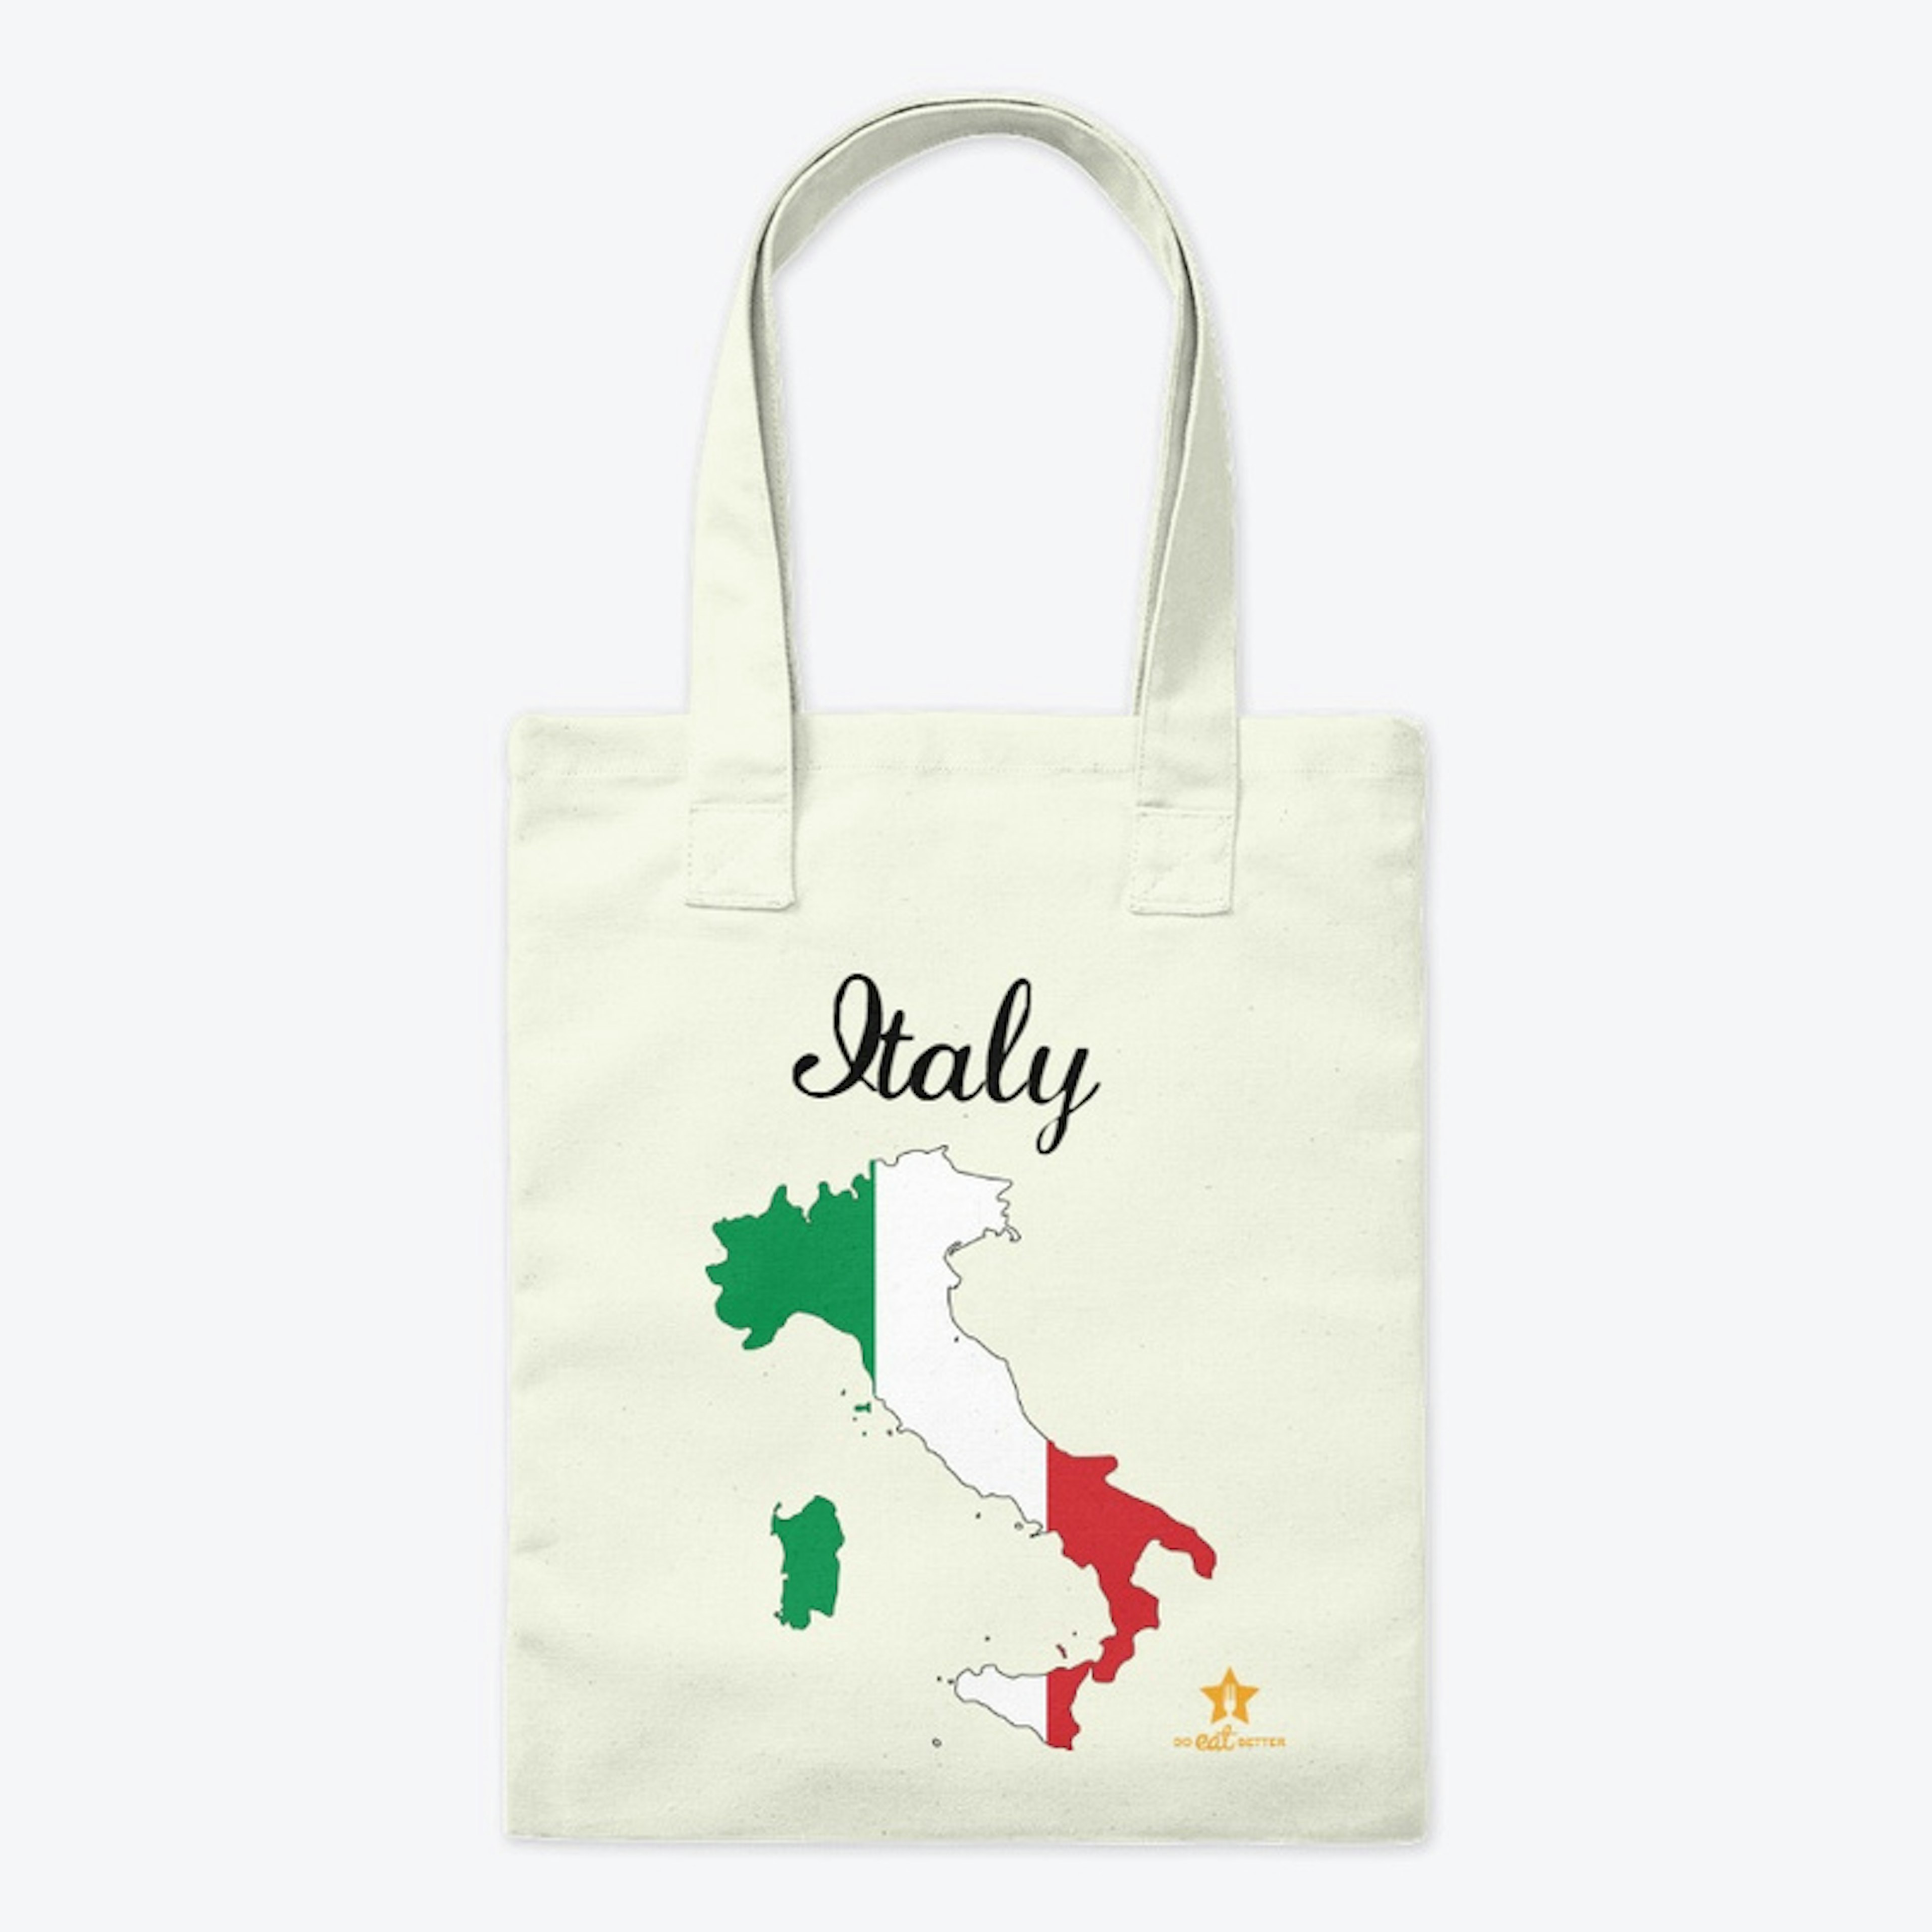 Italy - bag